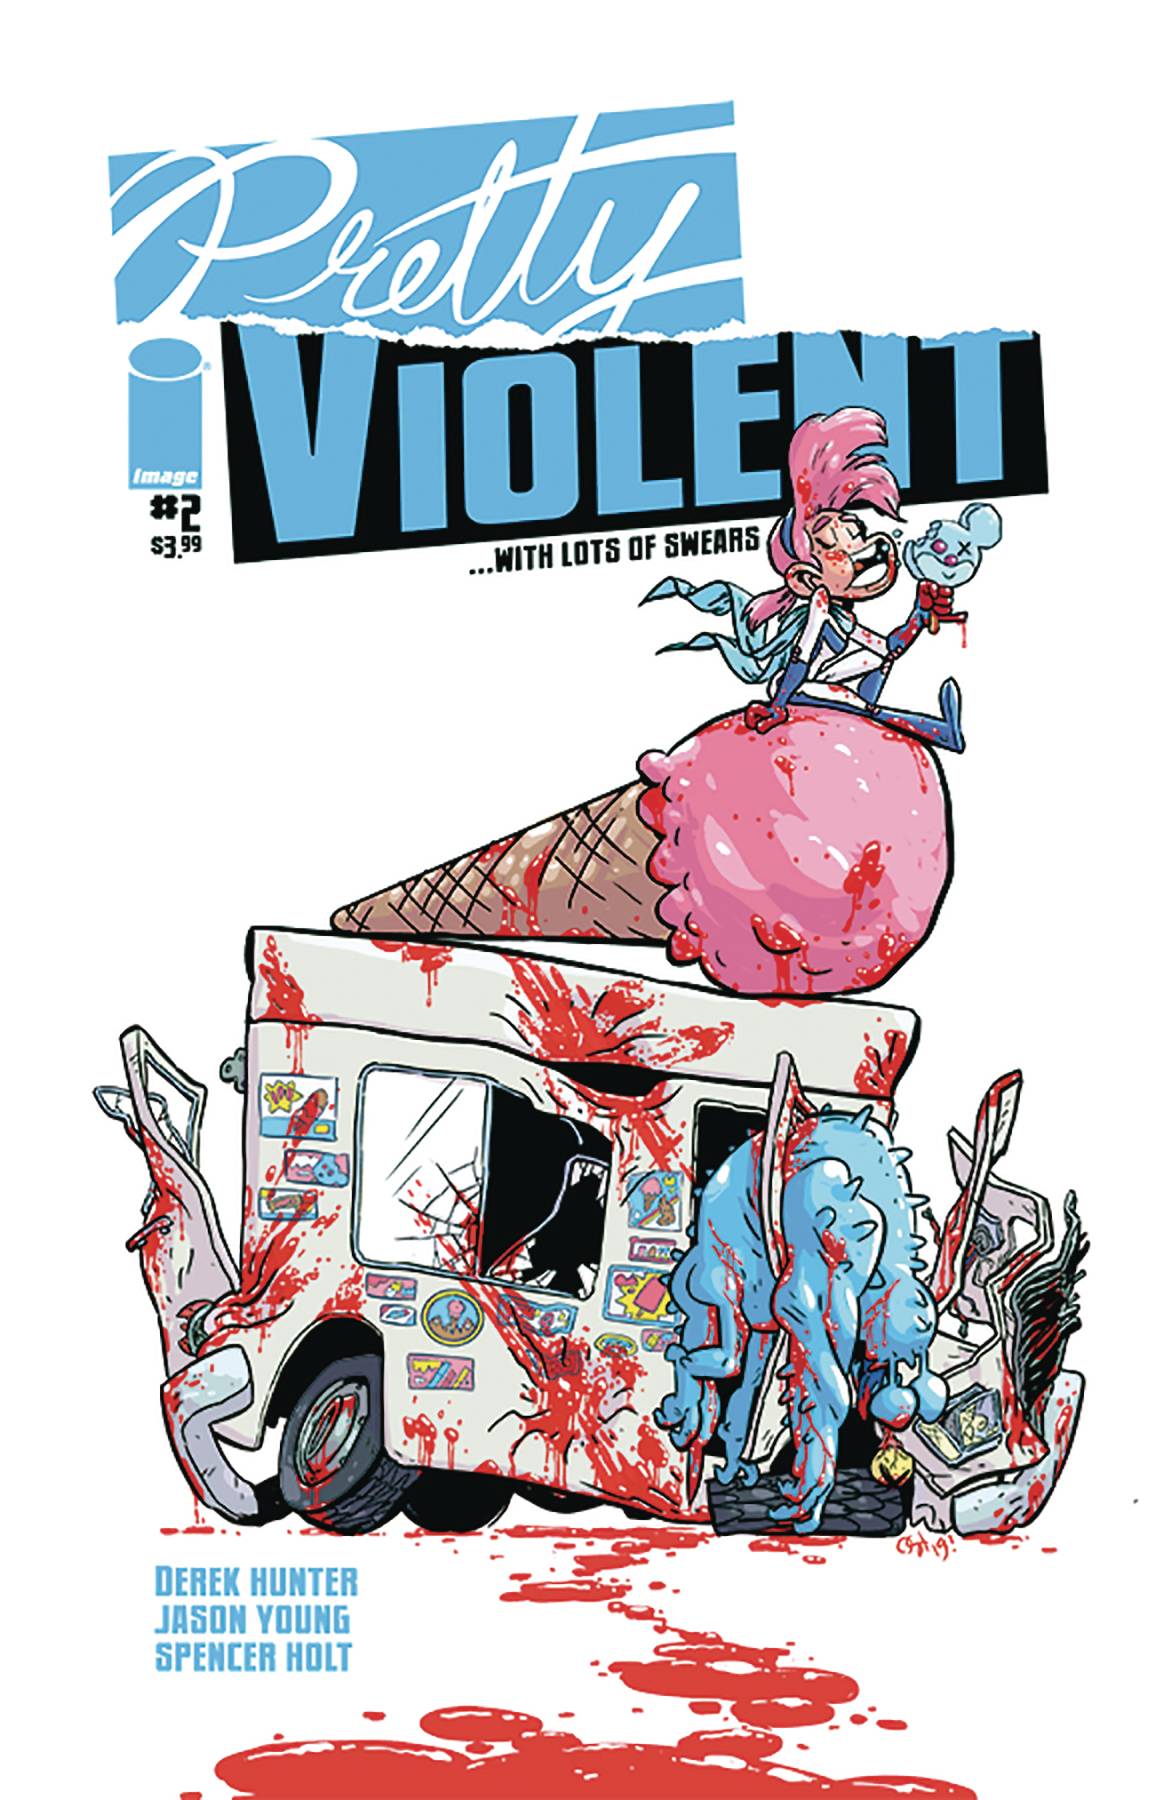 Pretty Violent #2 - State of Comics